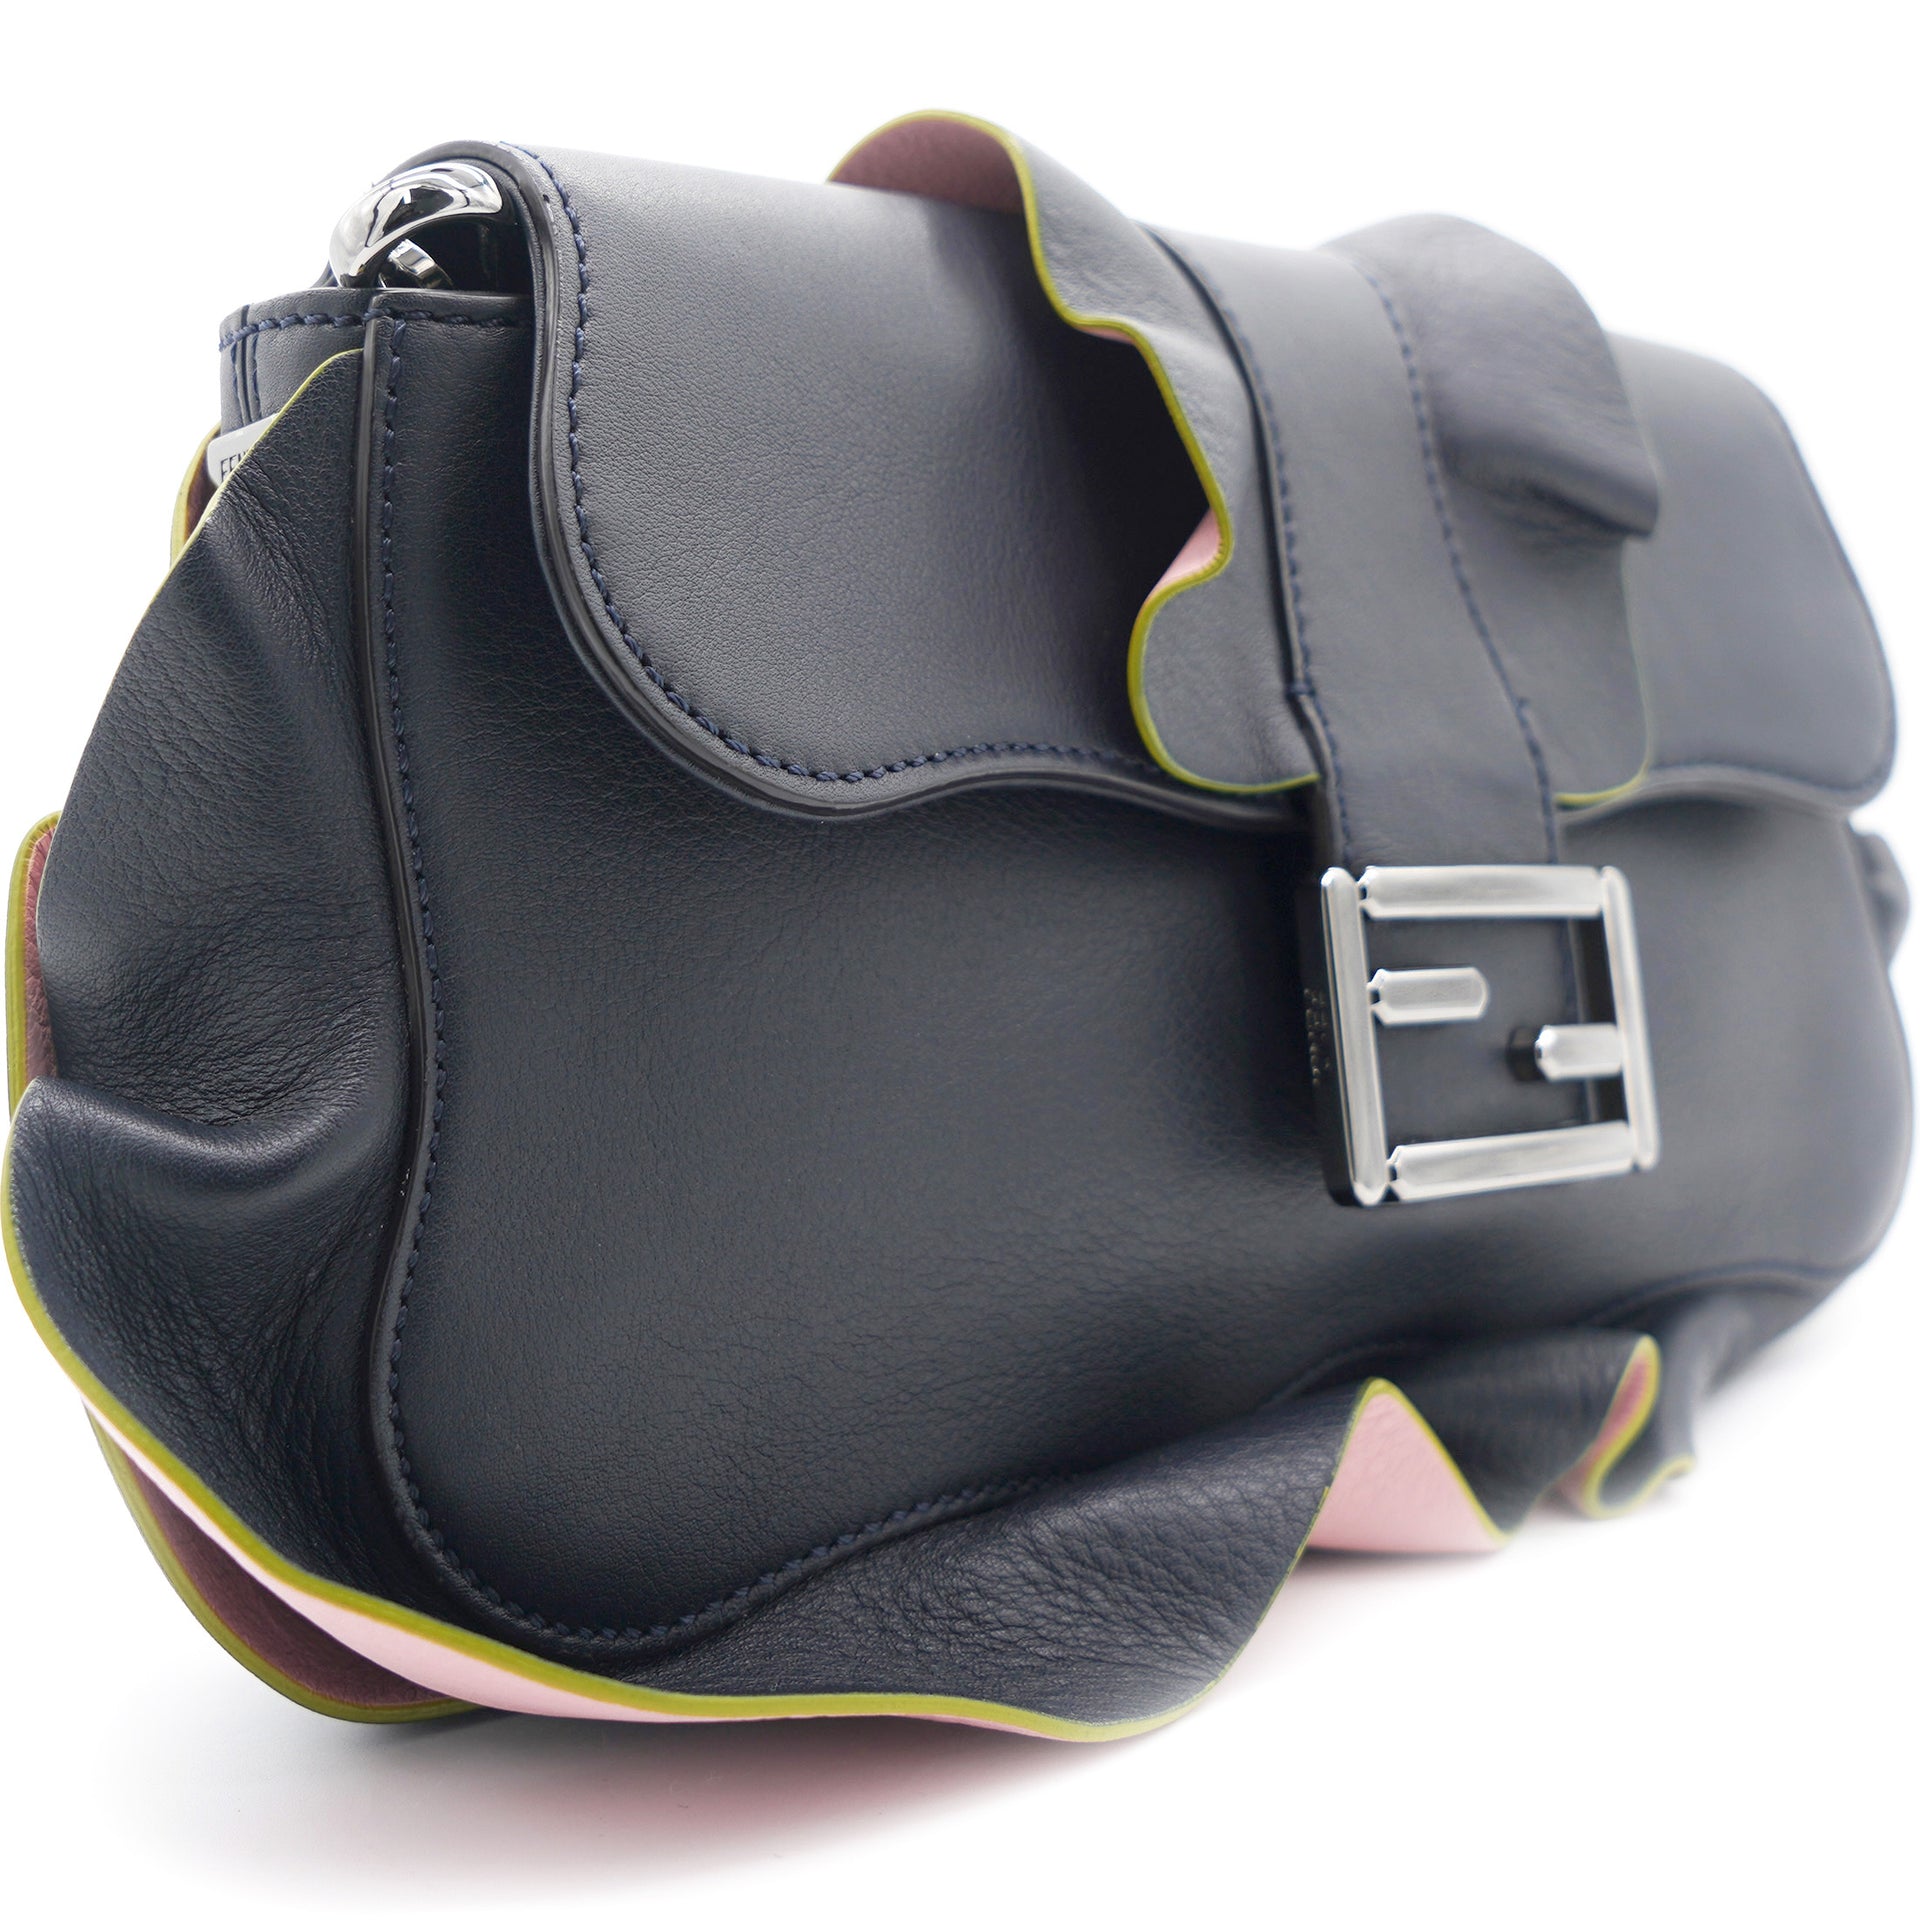 Fendi Baguette Micro Leather Shoulder Bag, $1,100